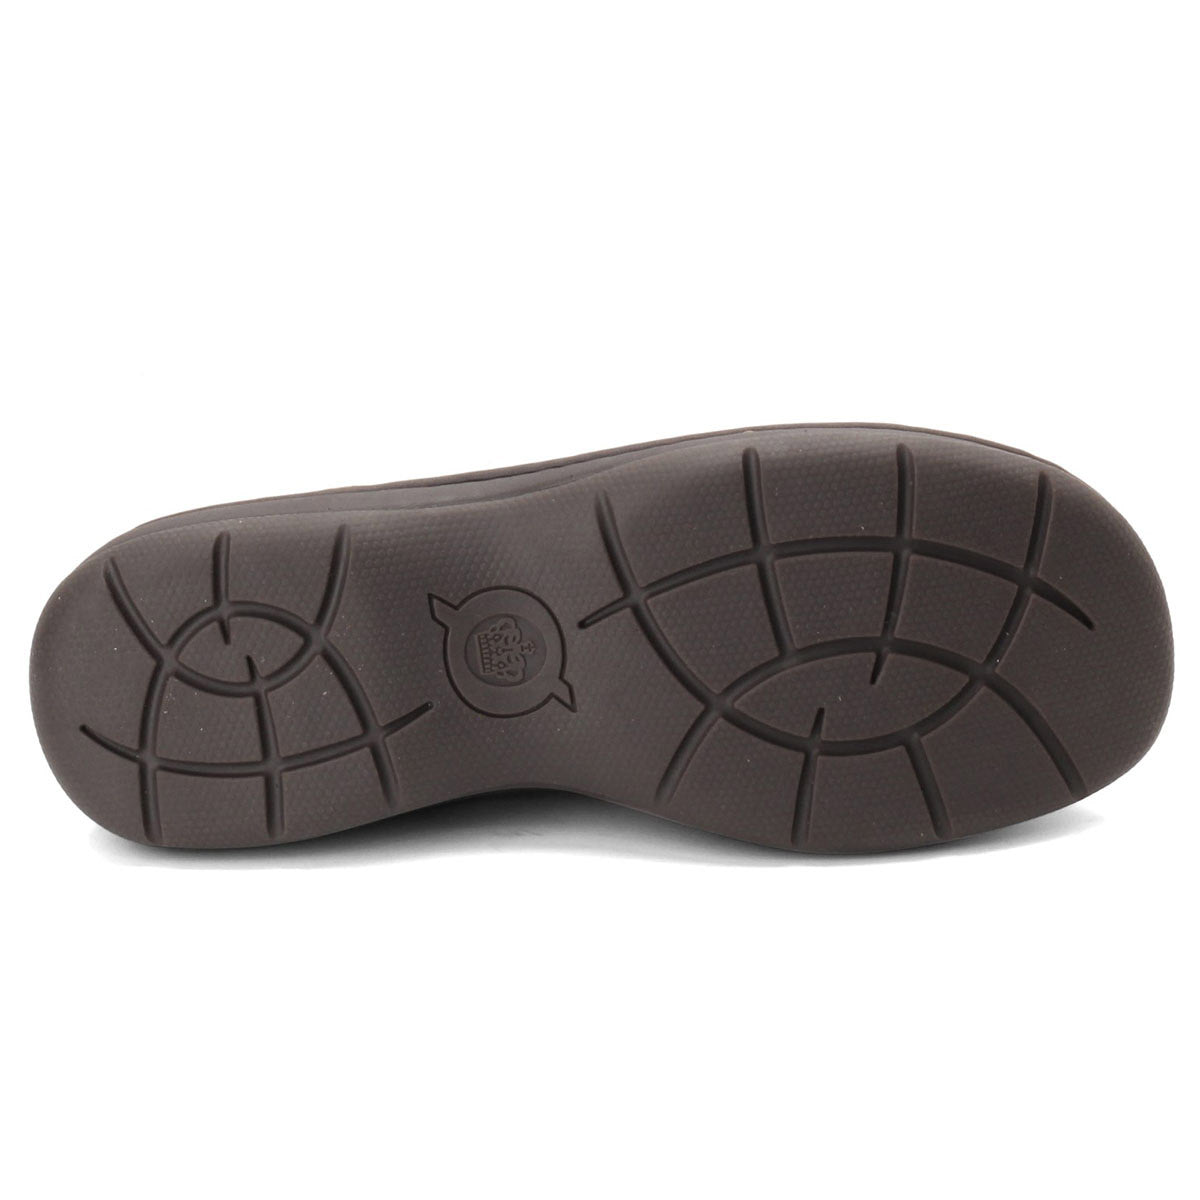 The bottom sole of the Born BORN BLAST III SLIP ON DARK TAN - MENS shoe, displaying its tread pattern.